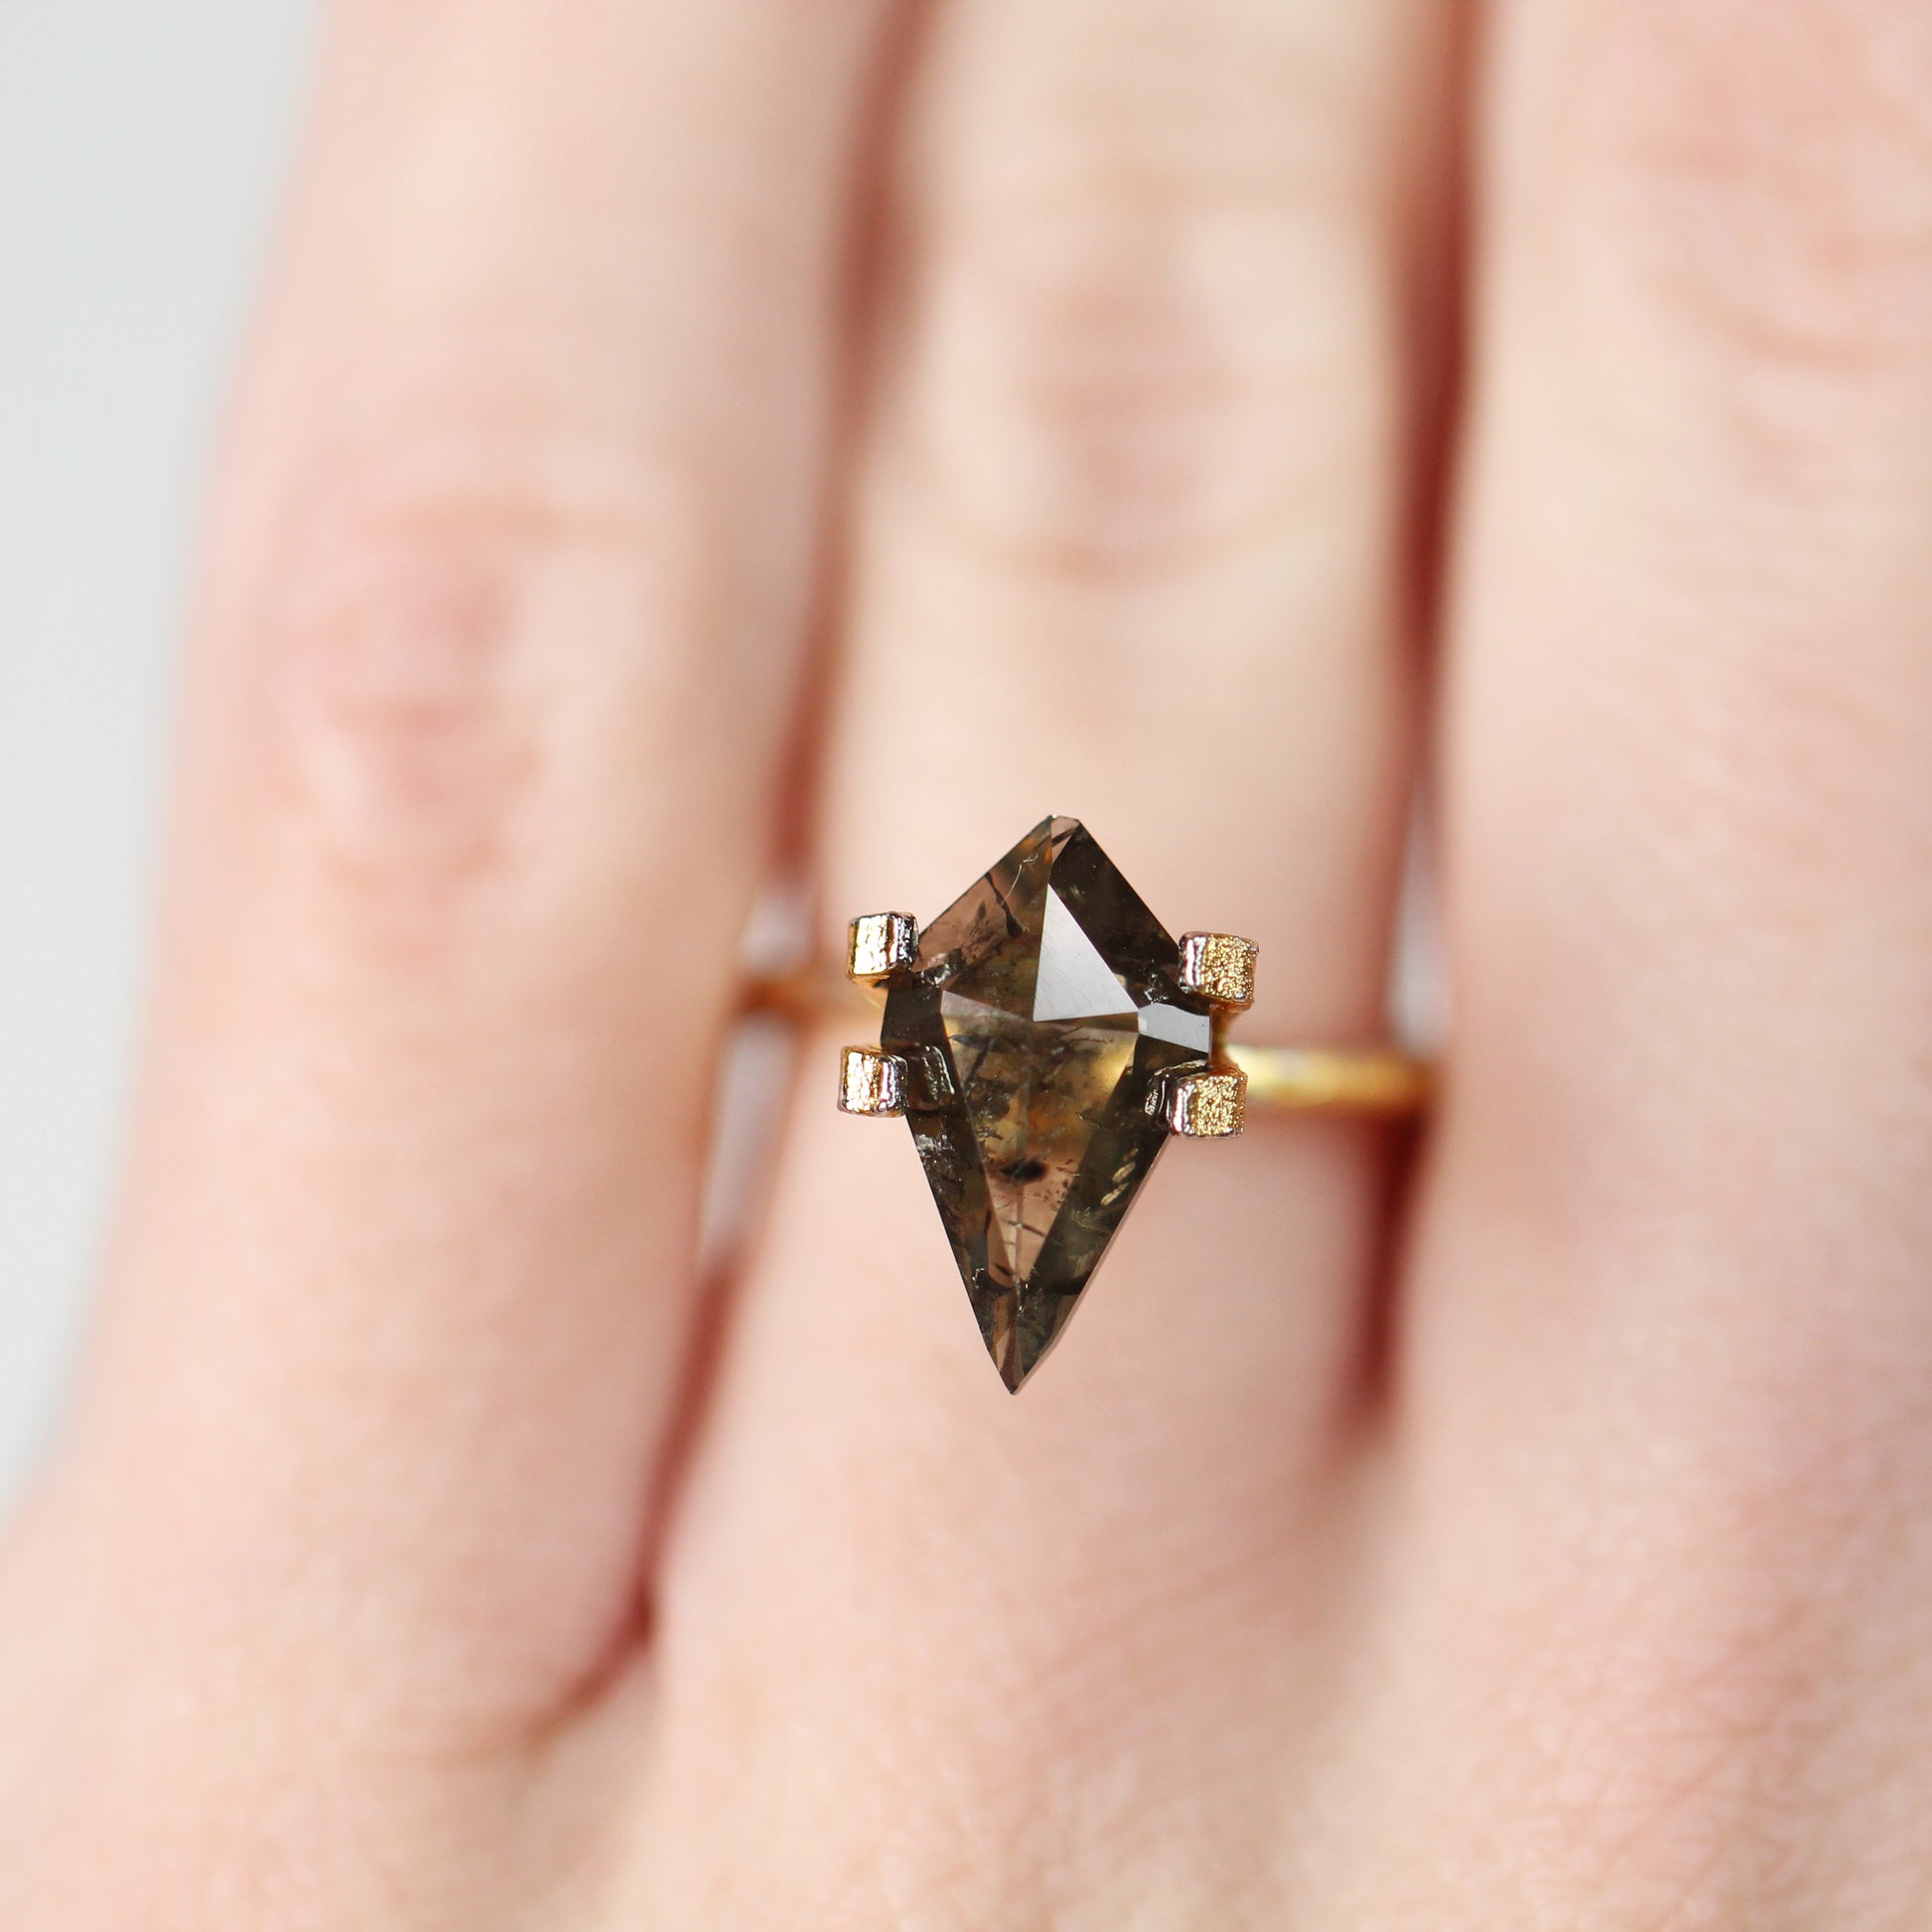 2.07 Carat Kite Celestial Diamond - Inventory Code KRB200 - Midwinter Co. Alternative Bridal Rings and Modern Fine Jewelry